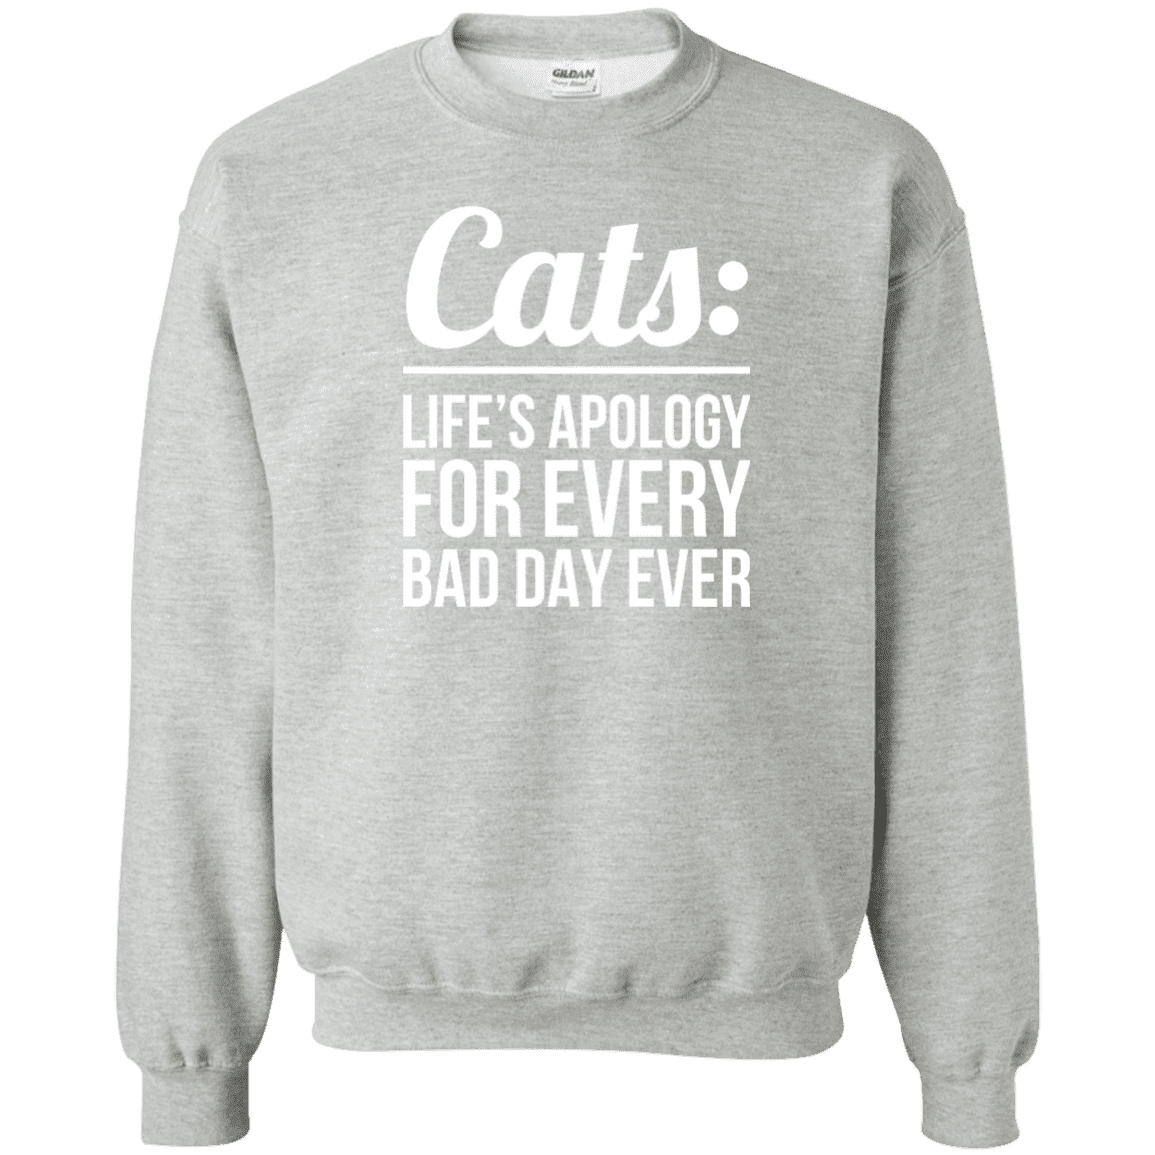 Cats Life's Apology - Sweatshirt.